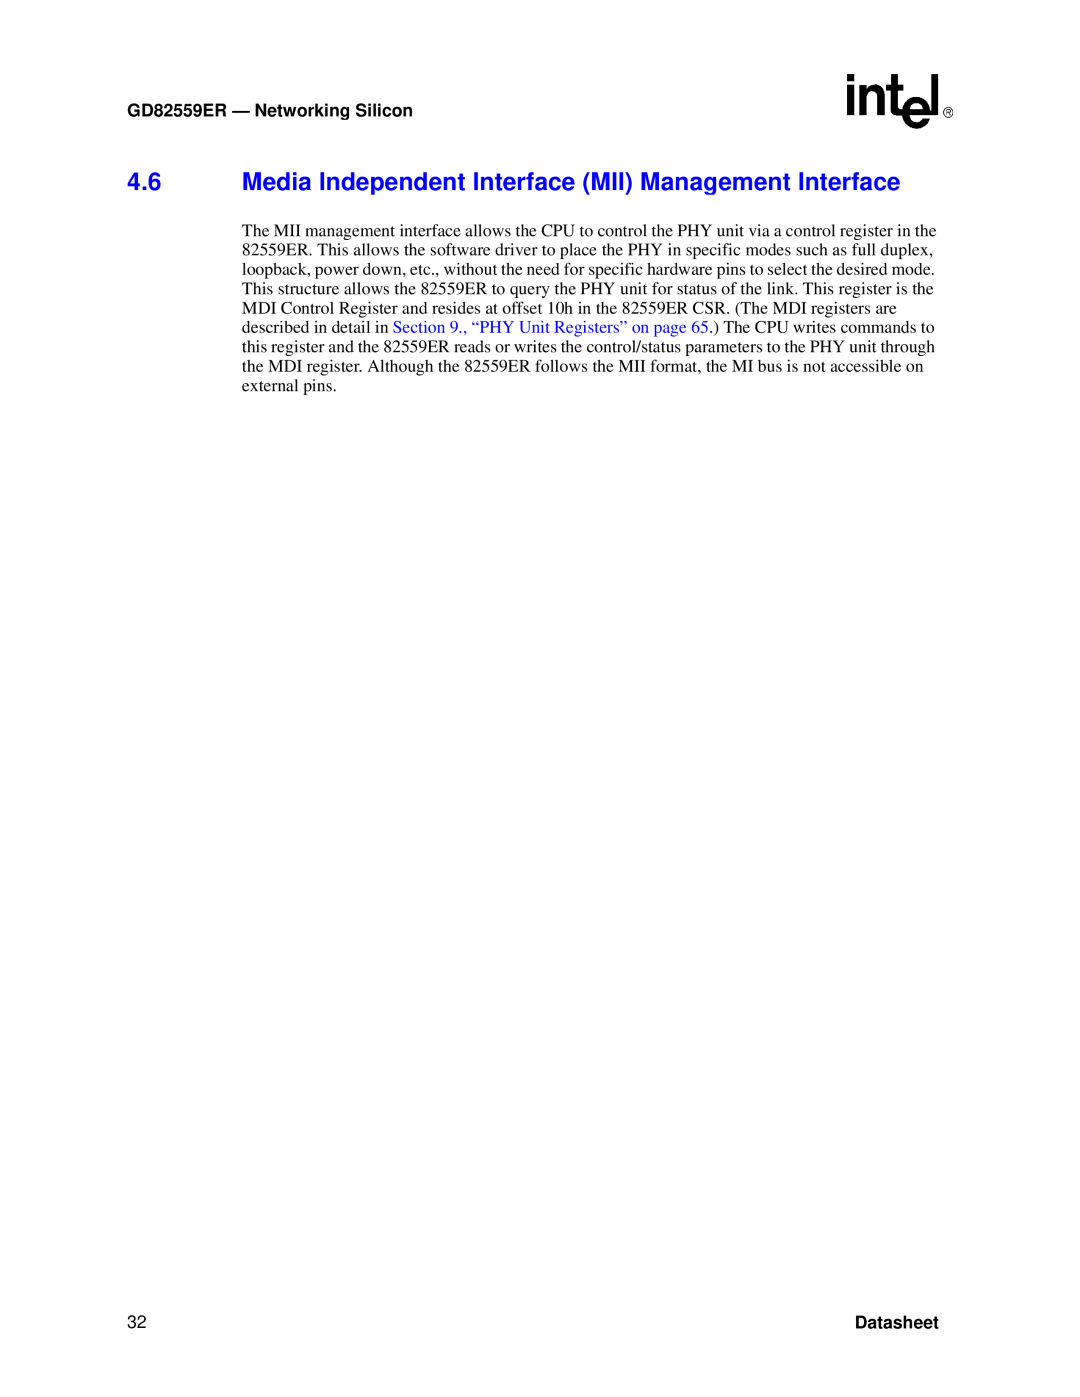 Intel manual Media Independent Interface MII Management Interface, GD82559ER - Networkin g Silicon, Datasheet 